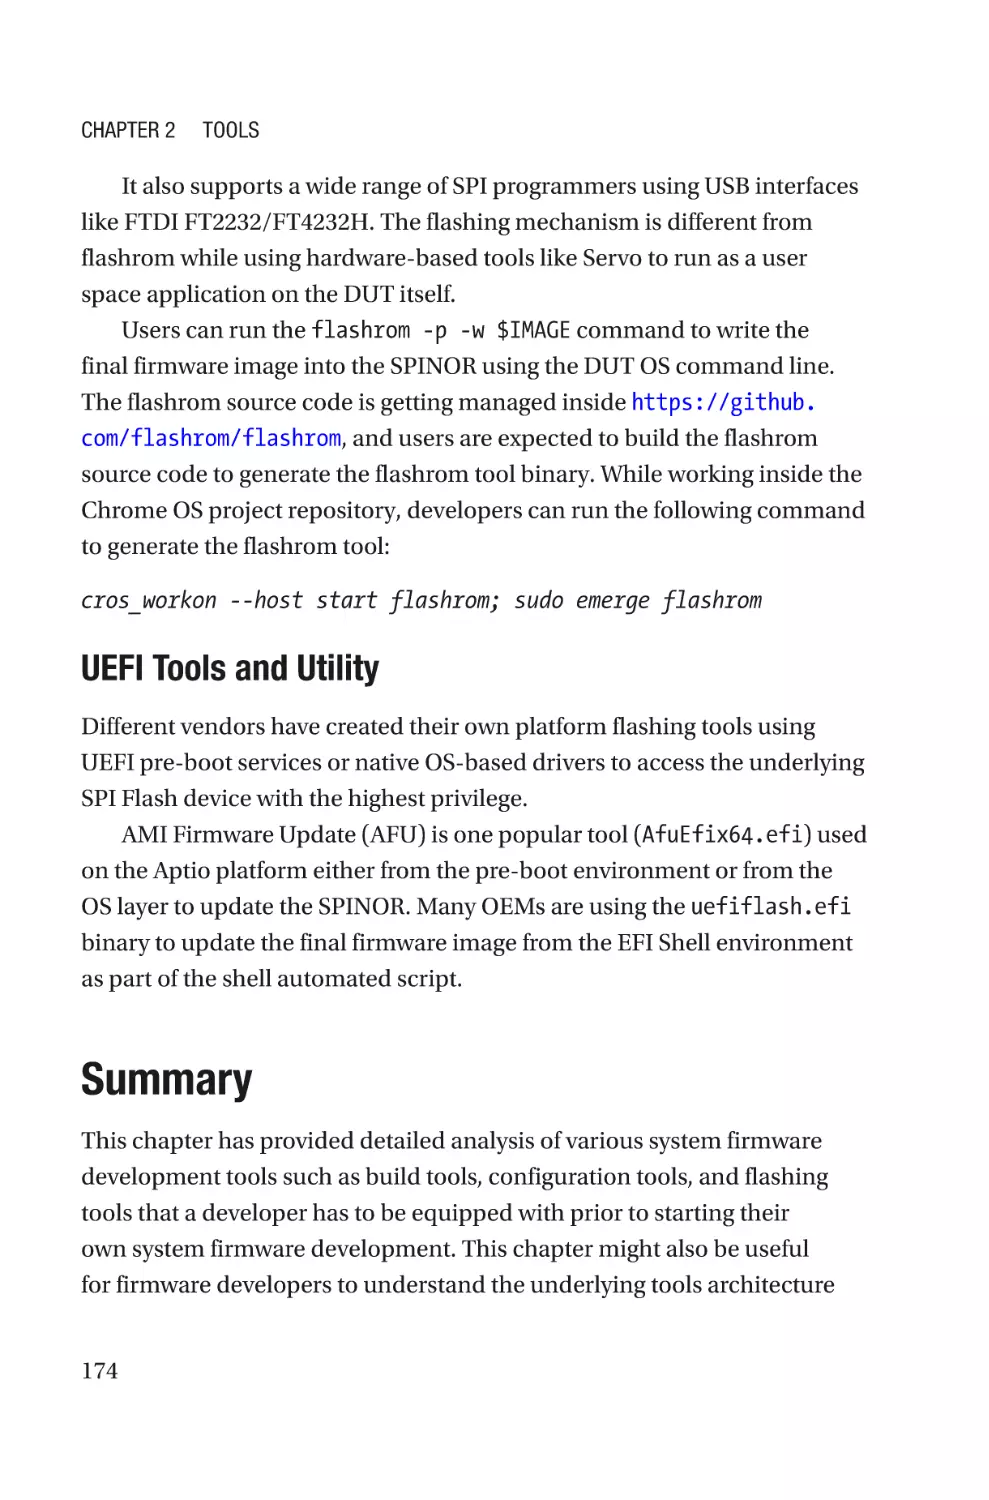 UEFI Tools and Utility
Summary